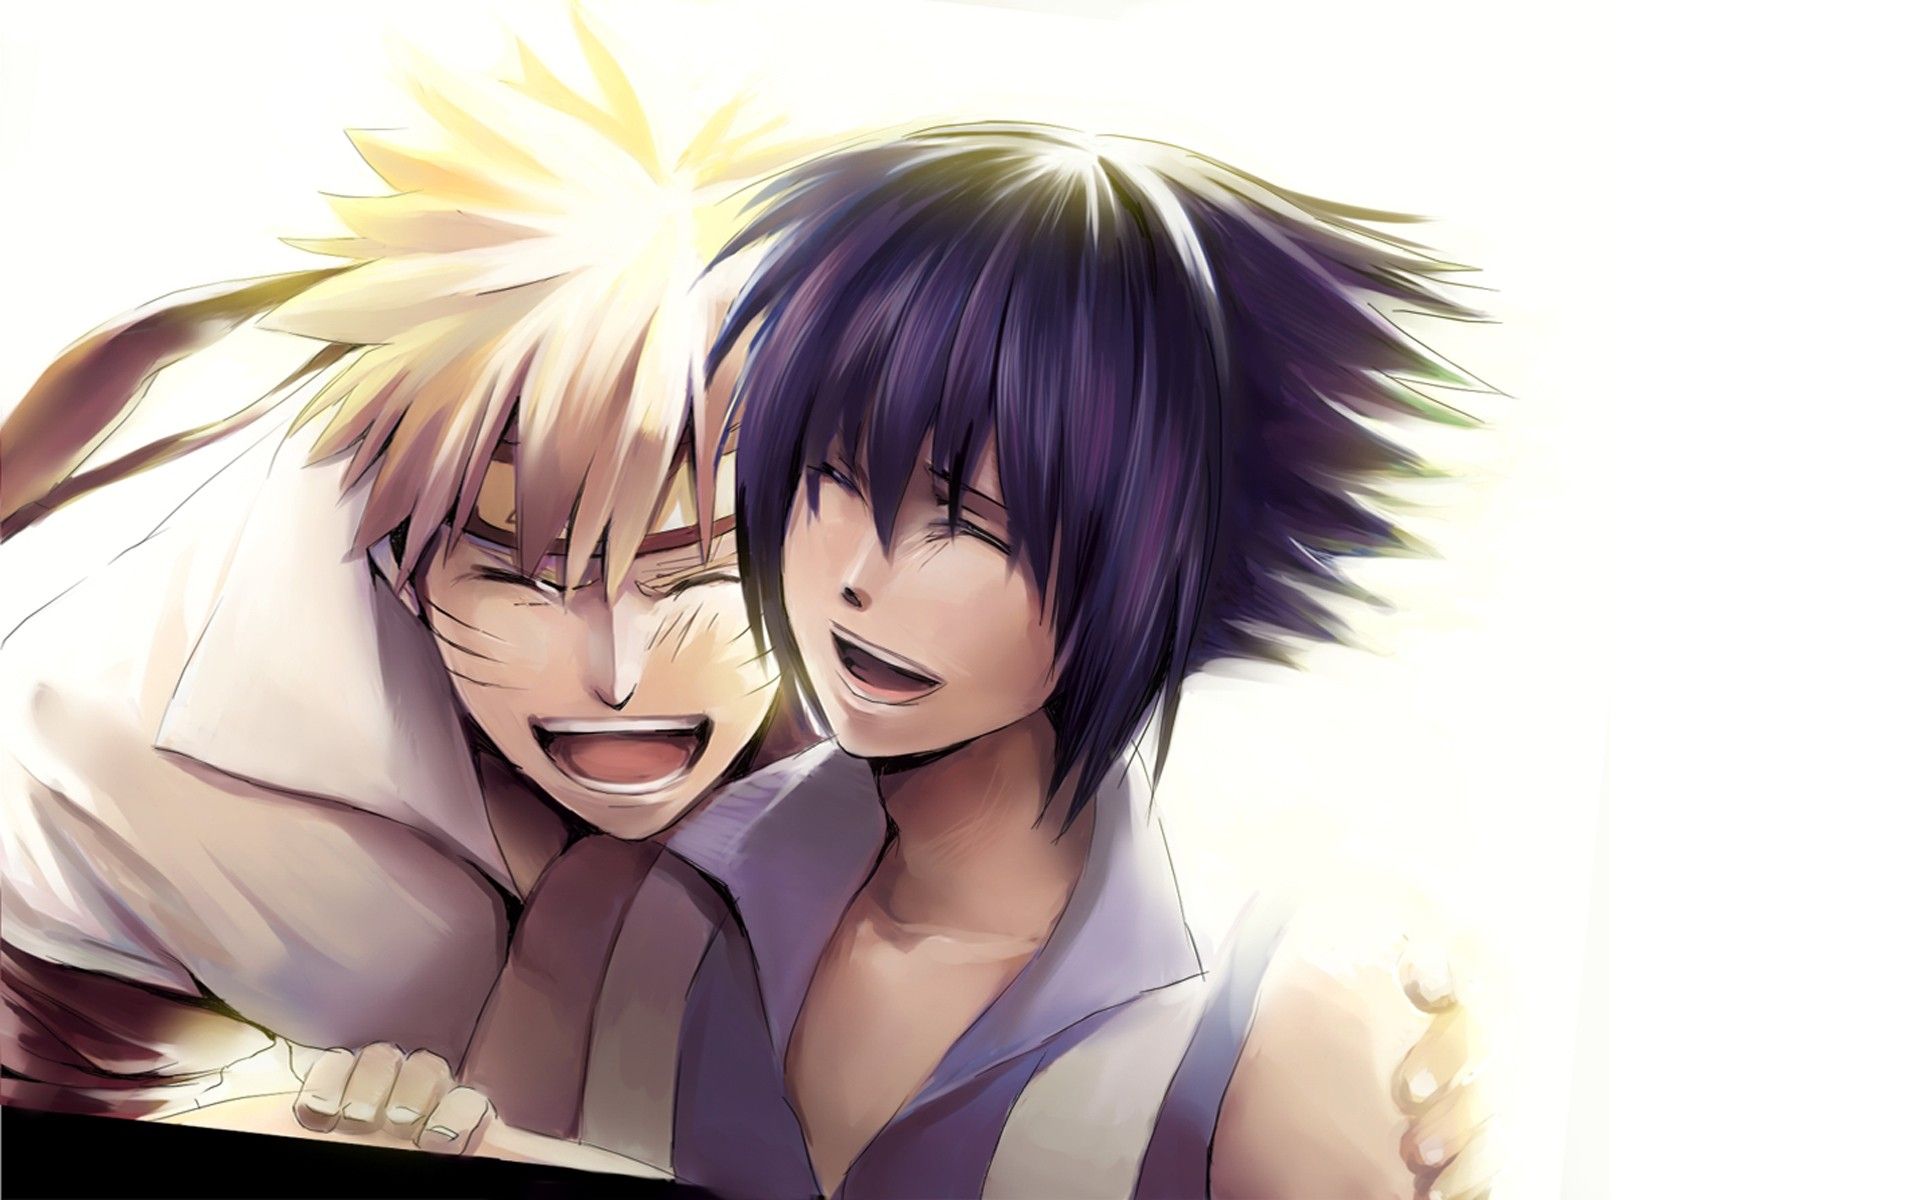 Uchiha Sasuke young Naruto: Shippuden smiling artwork characters